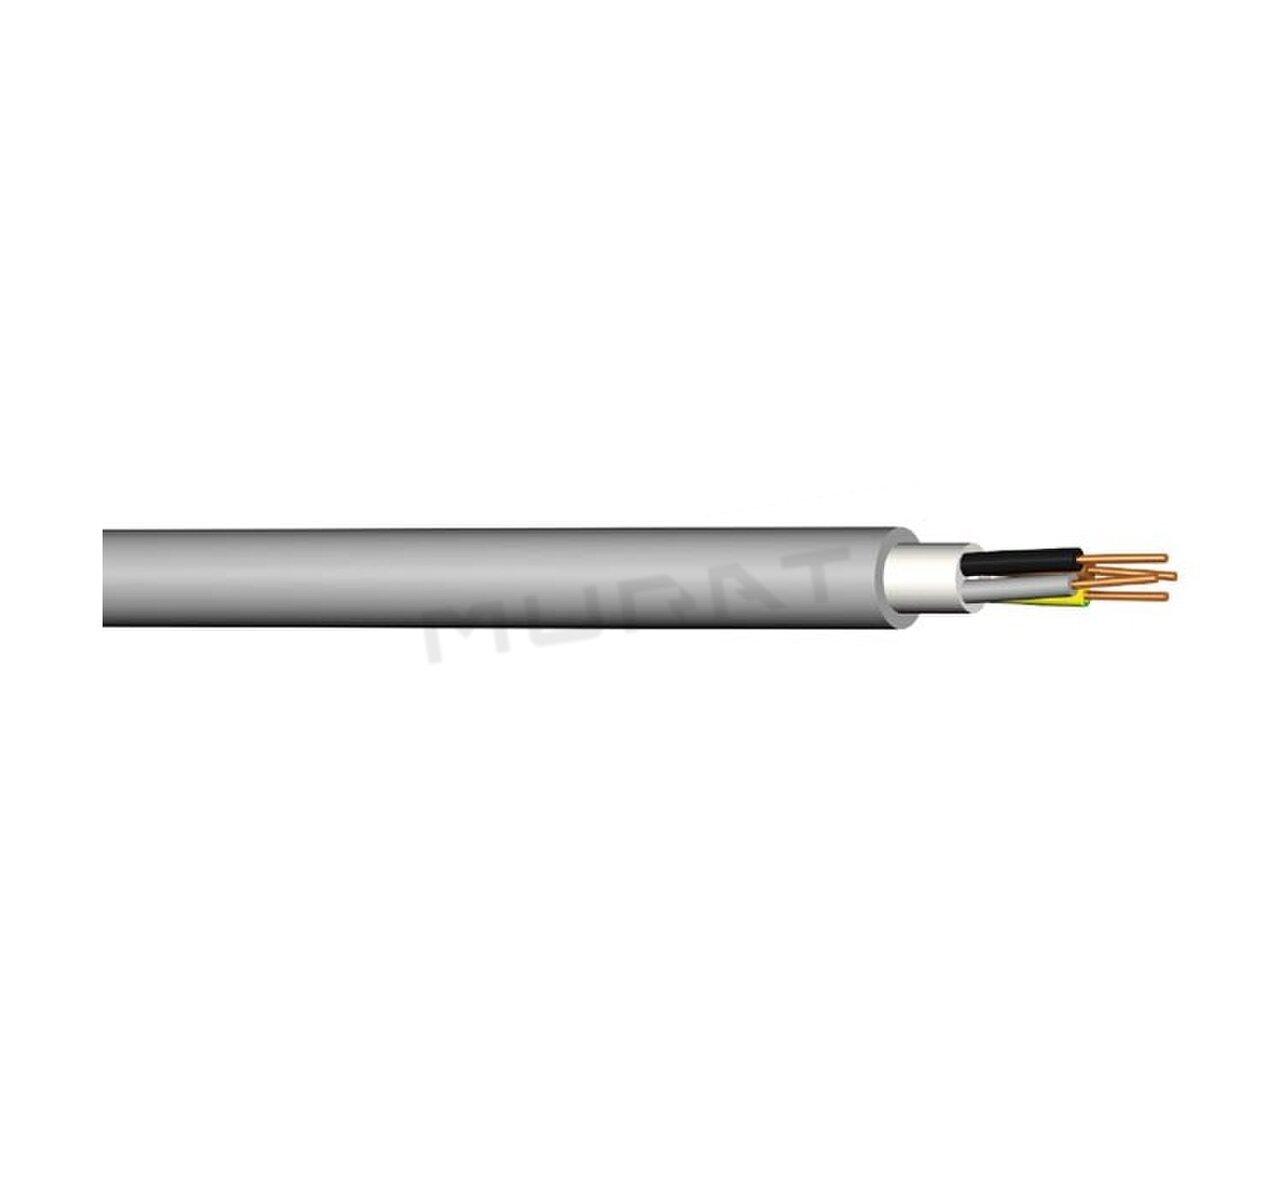 Kábel NYM-J 5x1,5 mm2